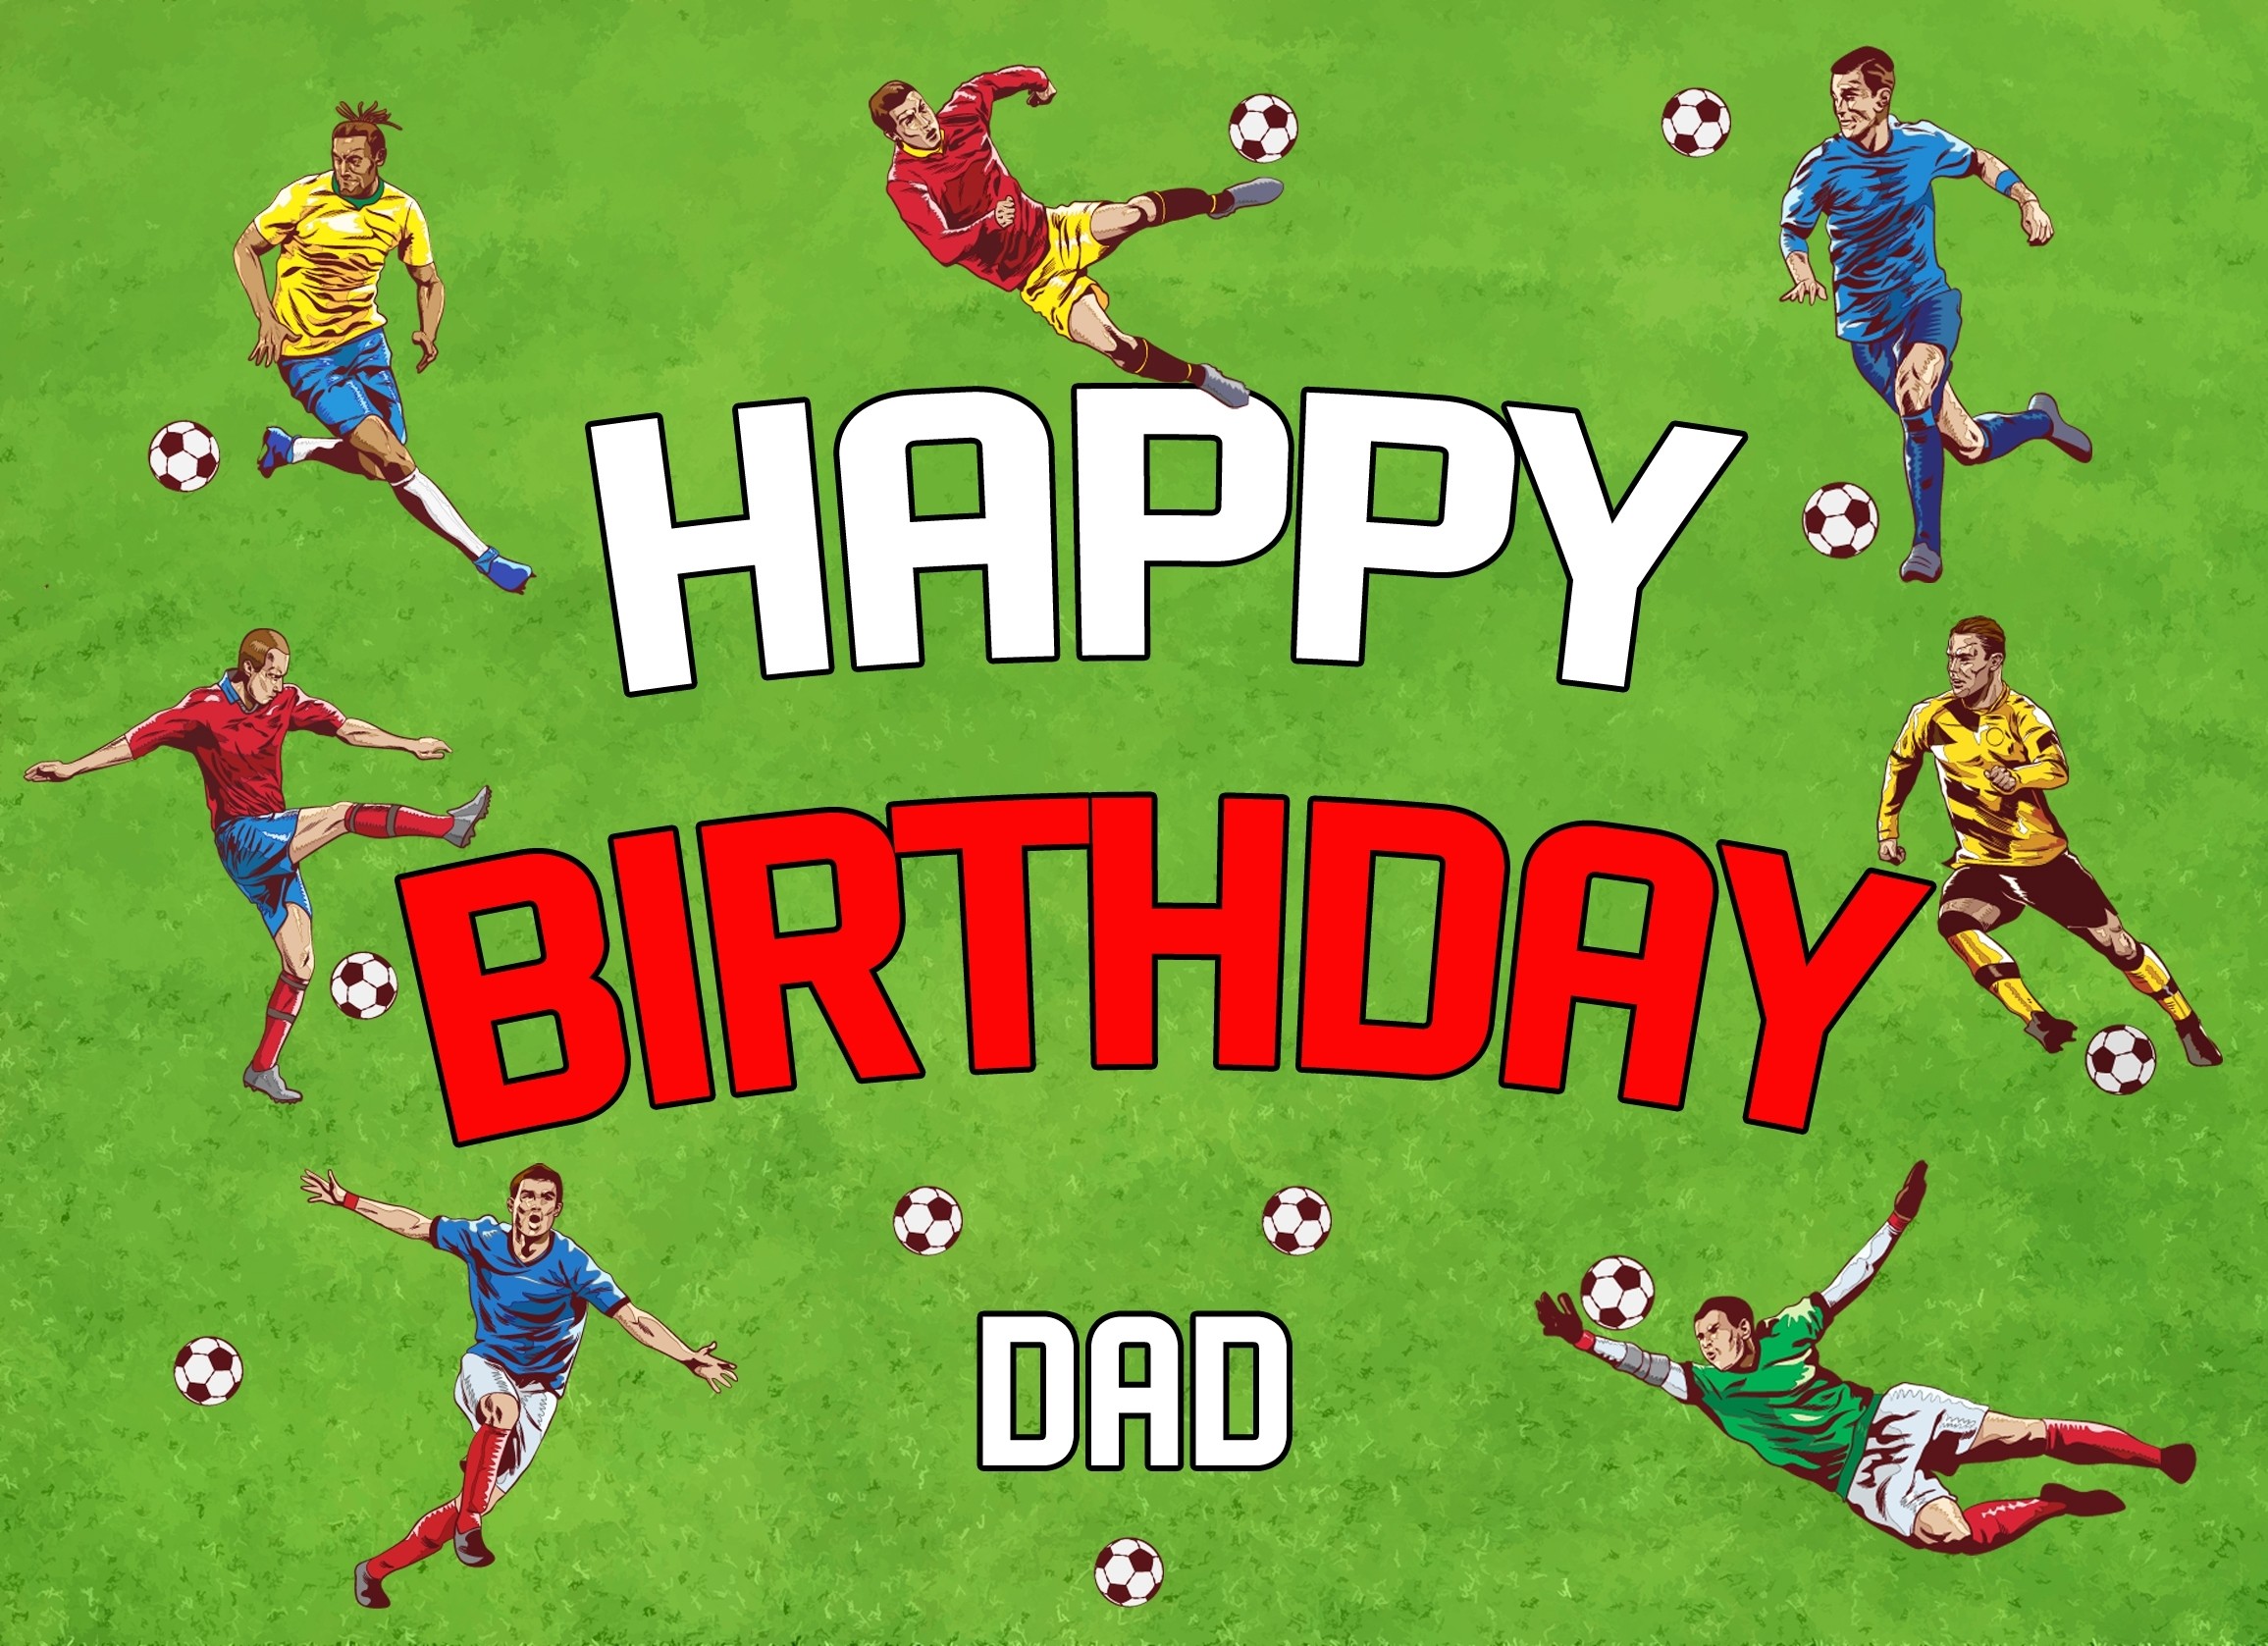 Football Birthday Card For Dad (Landscape)